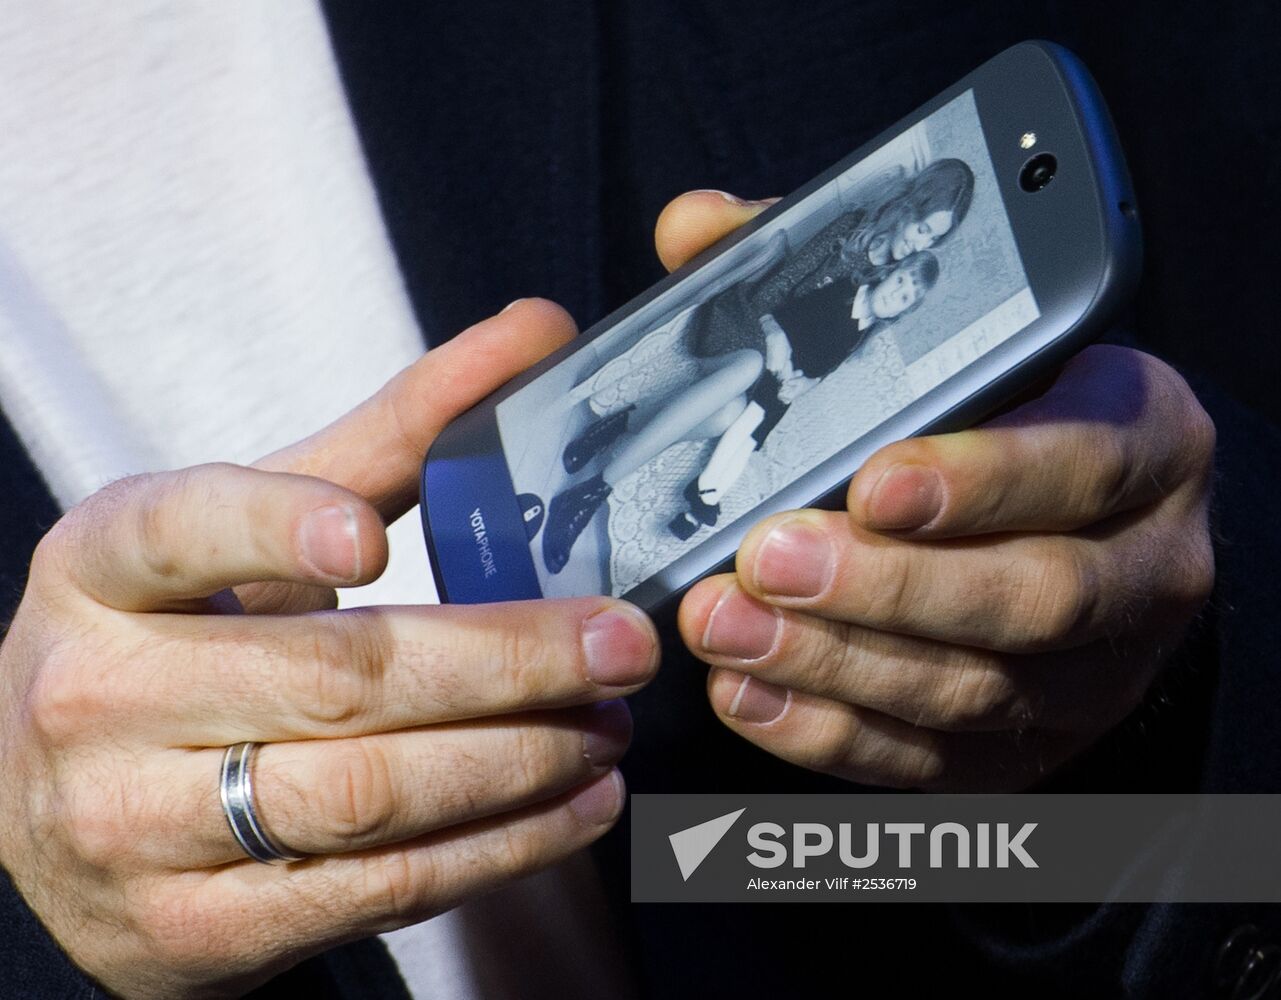 YotaPhone 2 smart phone presented in Russia